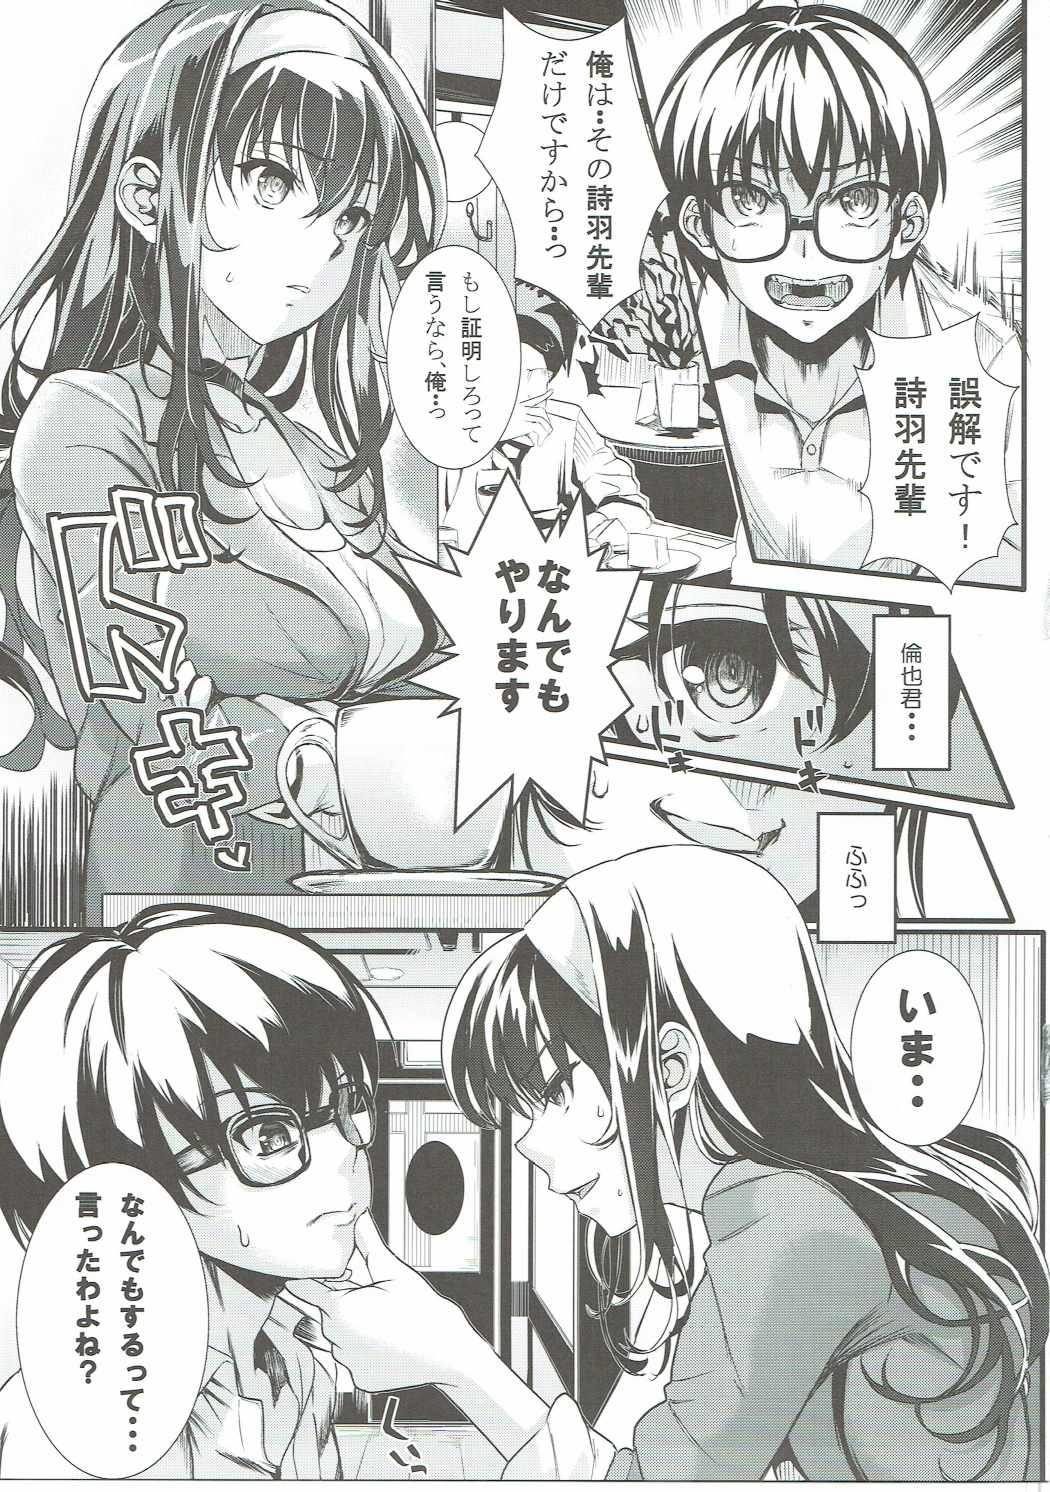 Legs Saenai Futari no Itashikata 4 - Saenai heroine no sodatekata Lesbians - Page 4